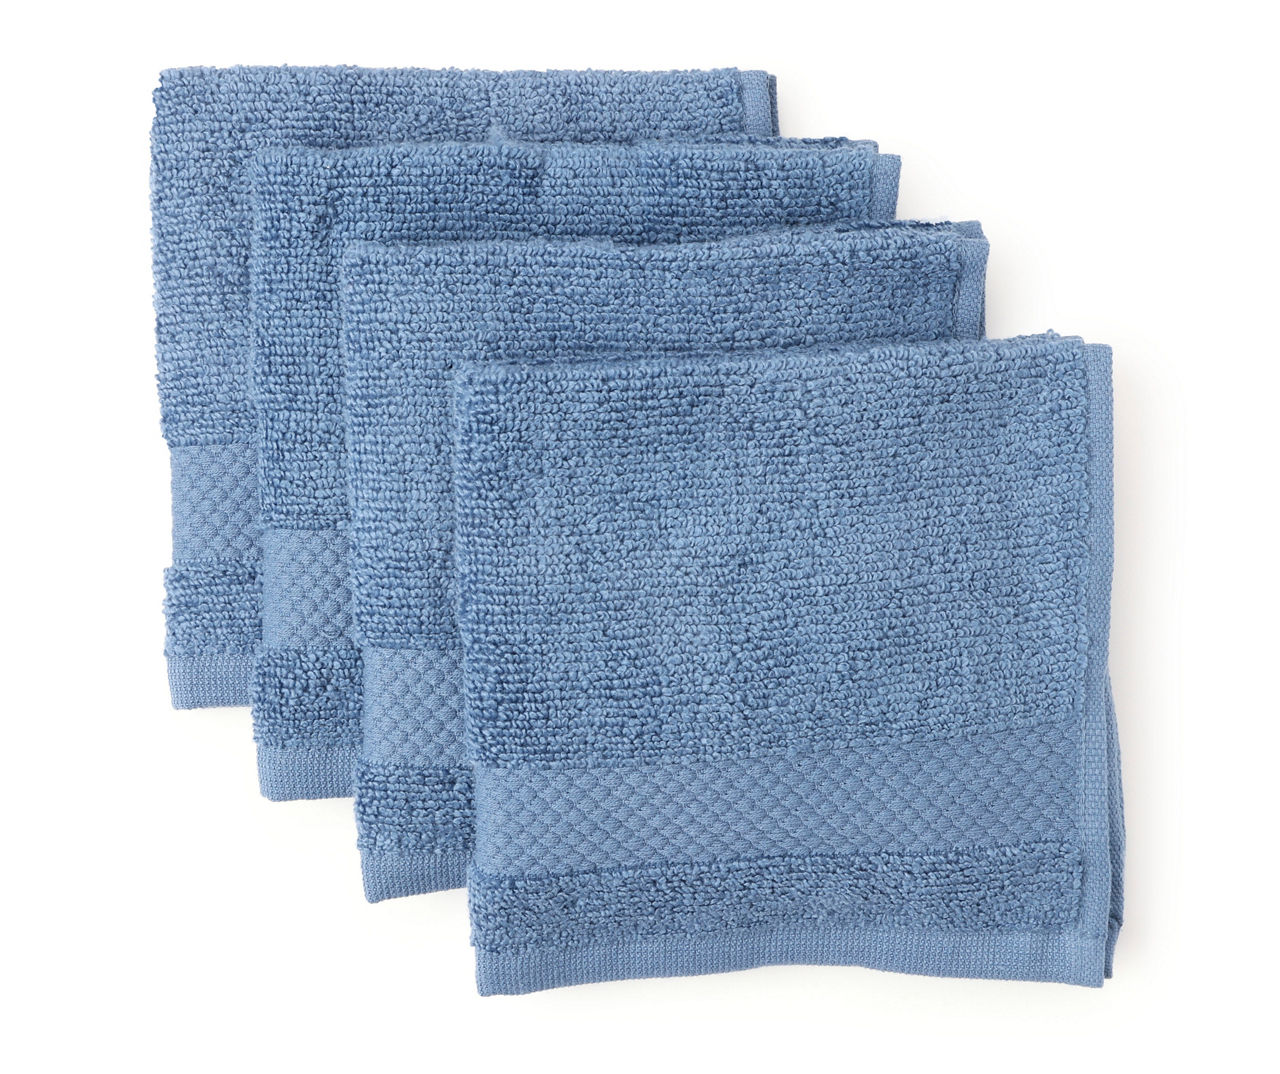 Clorox Towels & Dishcloths for sale